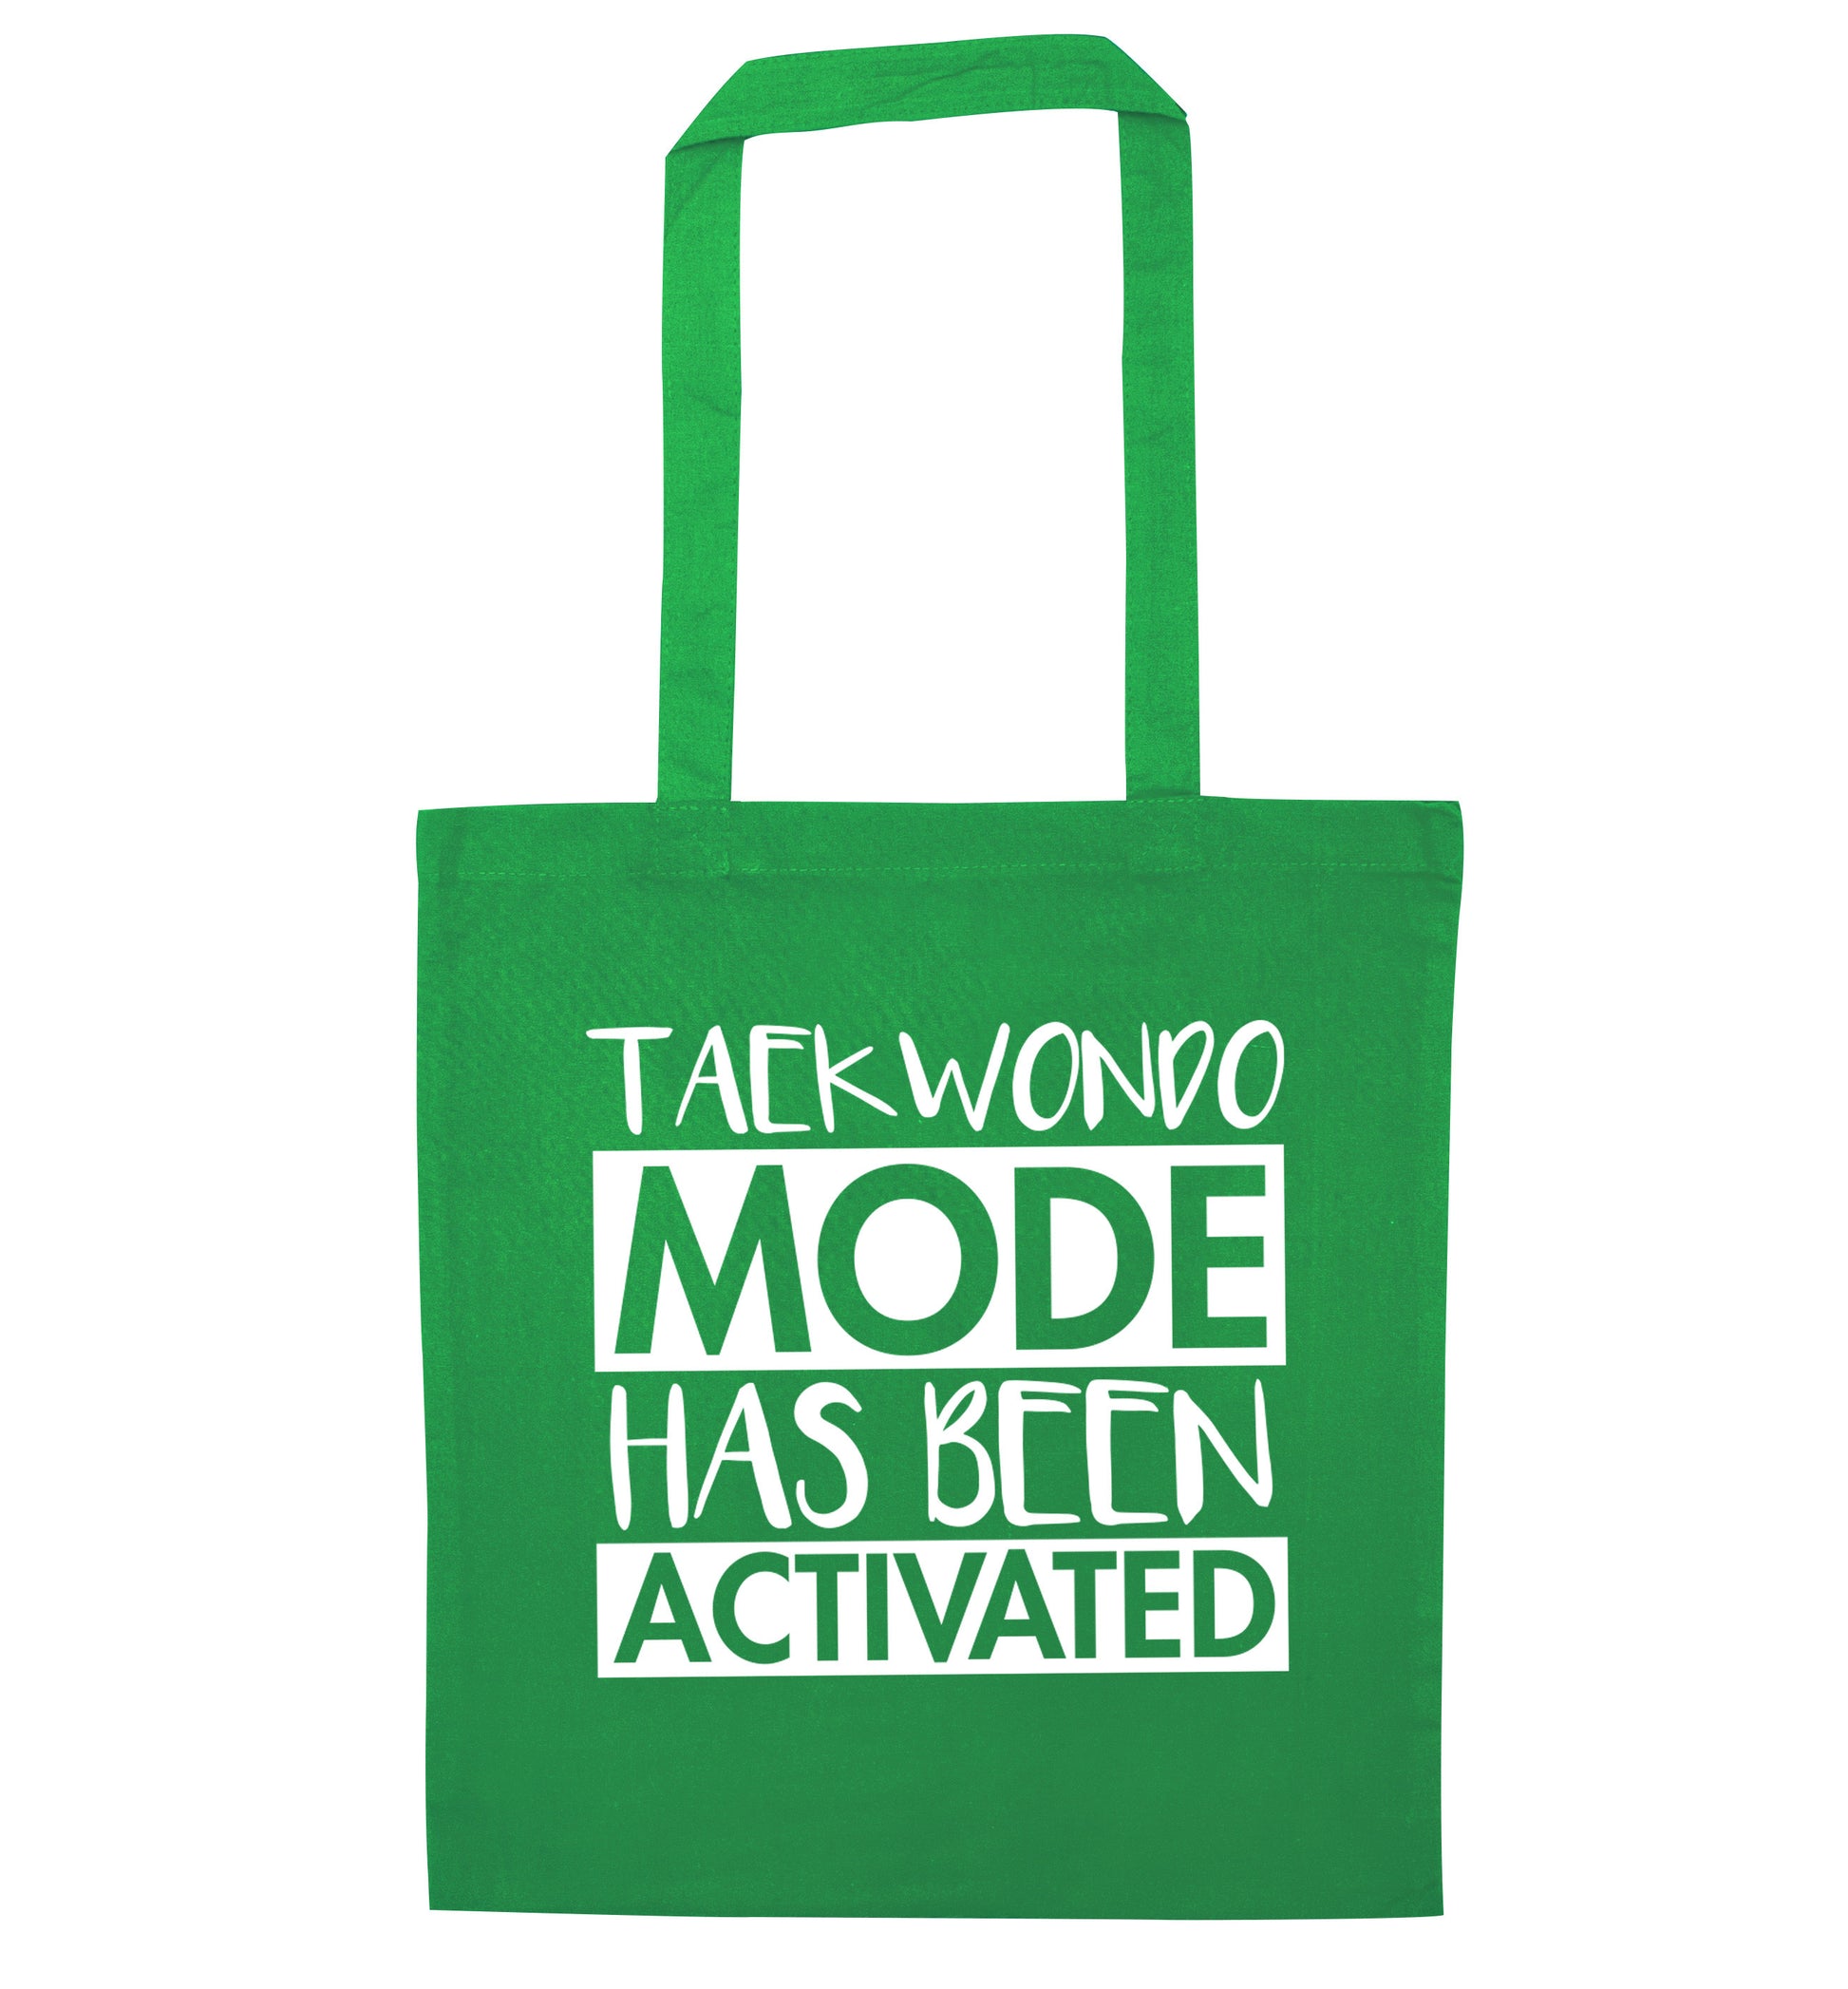 Taekwondo mode activated green tote bag